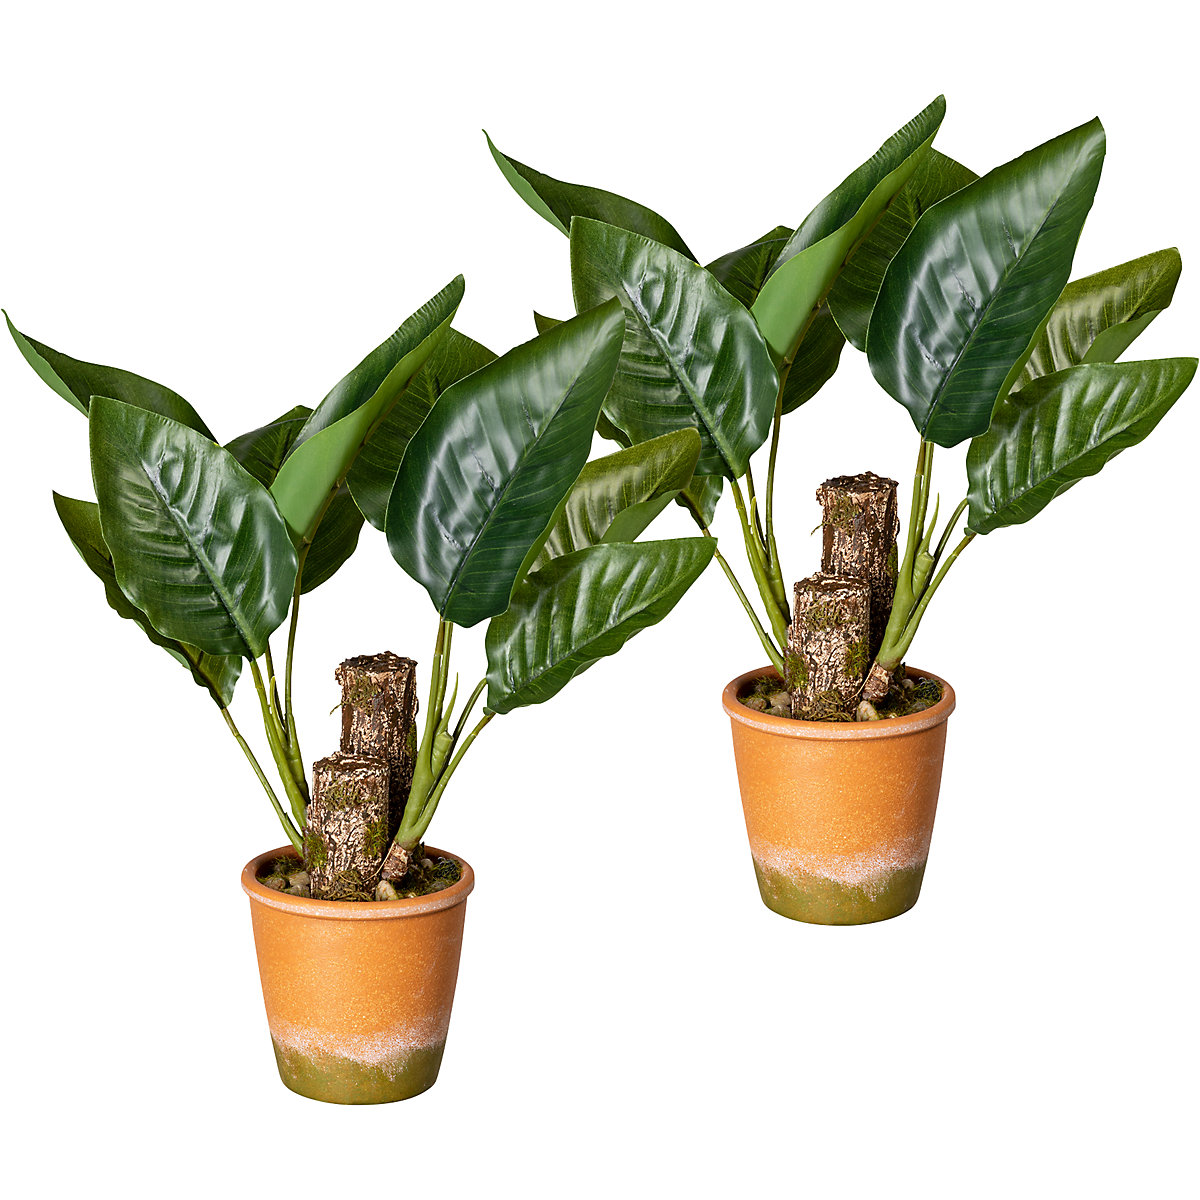 Kanna - roślina liściasta